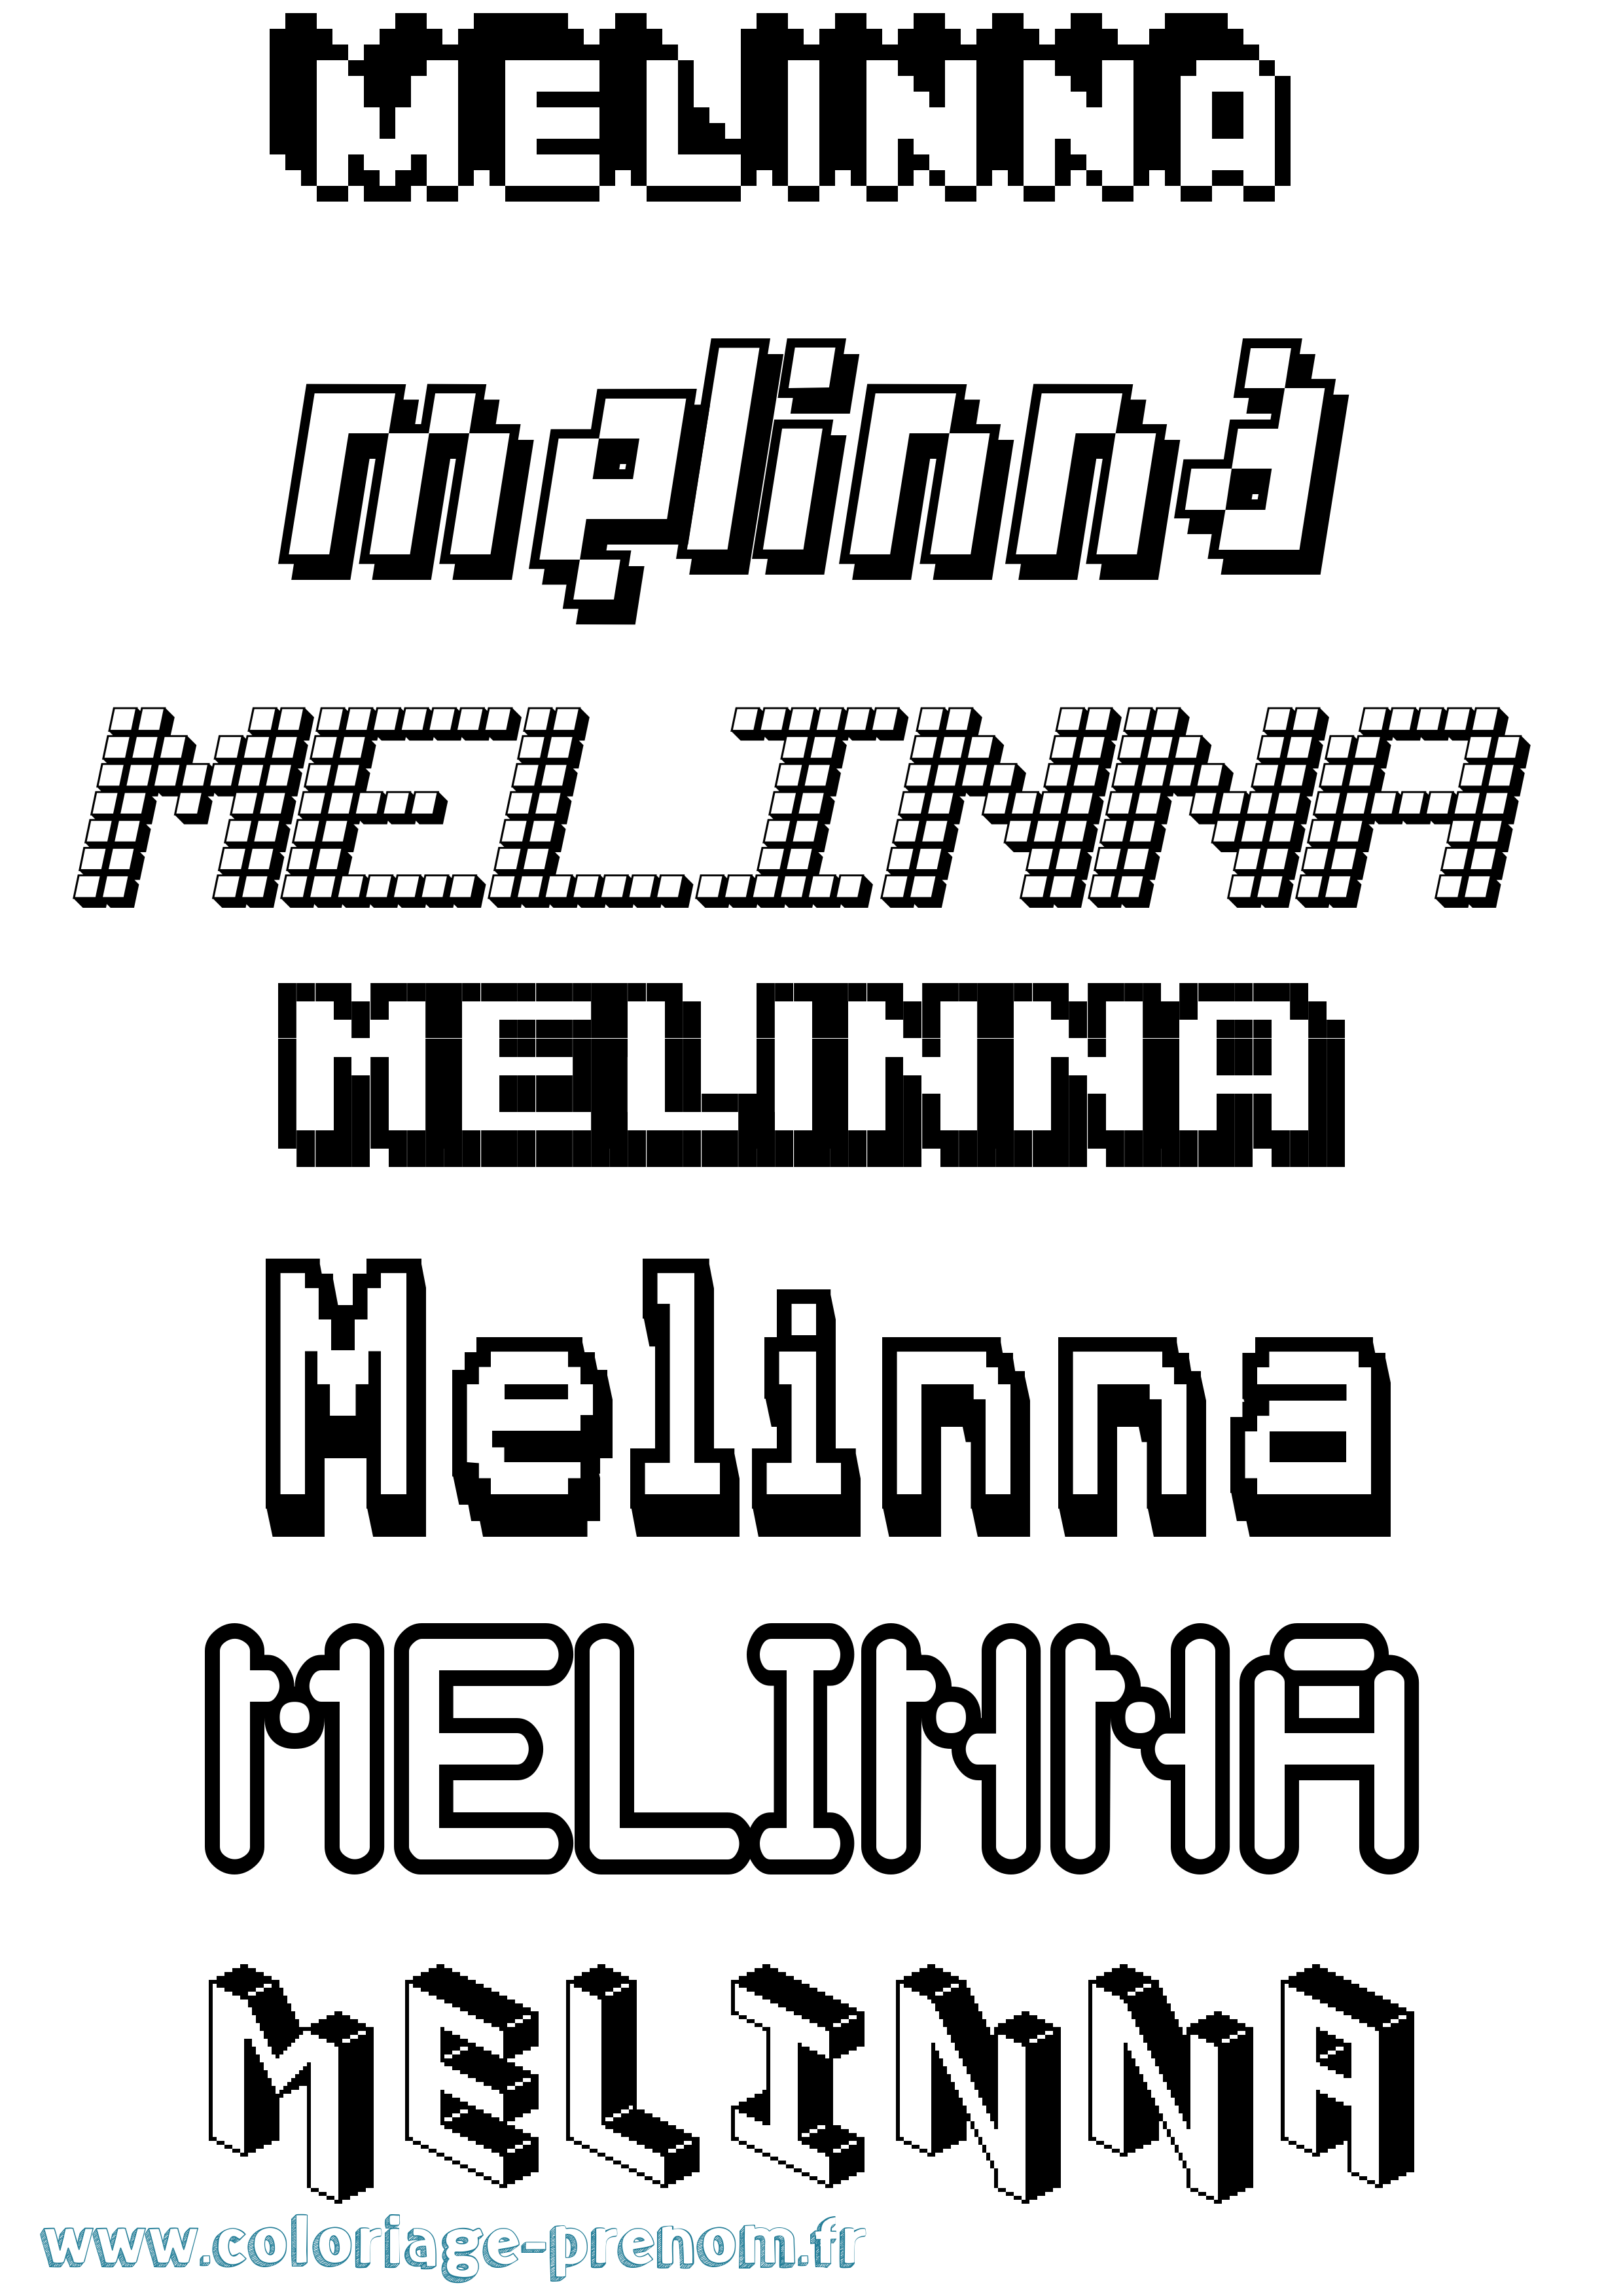 Coloriage prénom Melinna Pixel